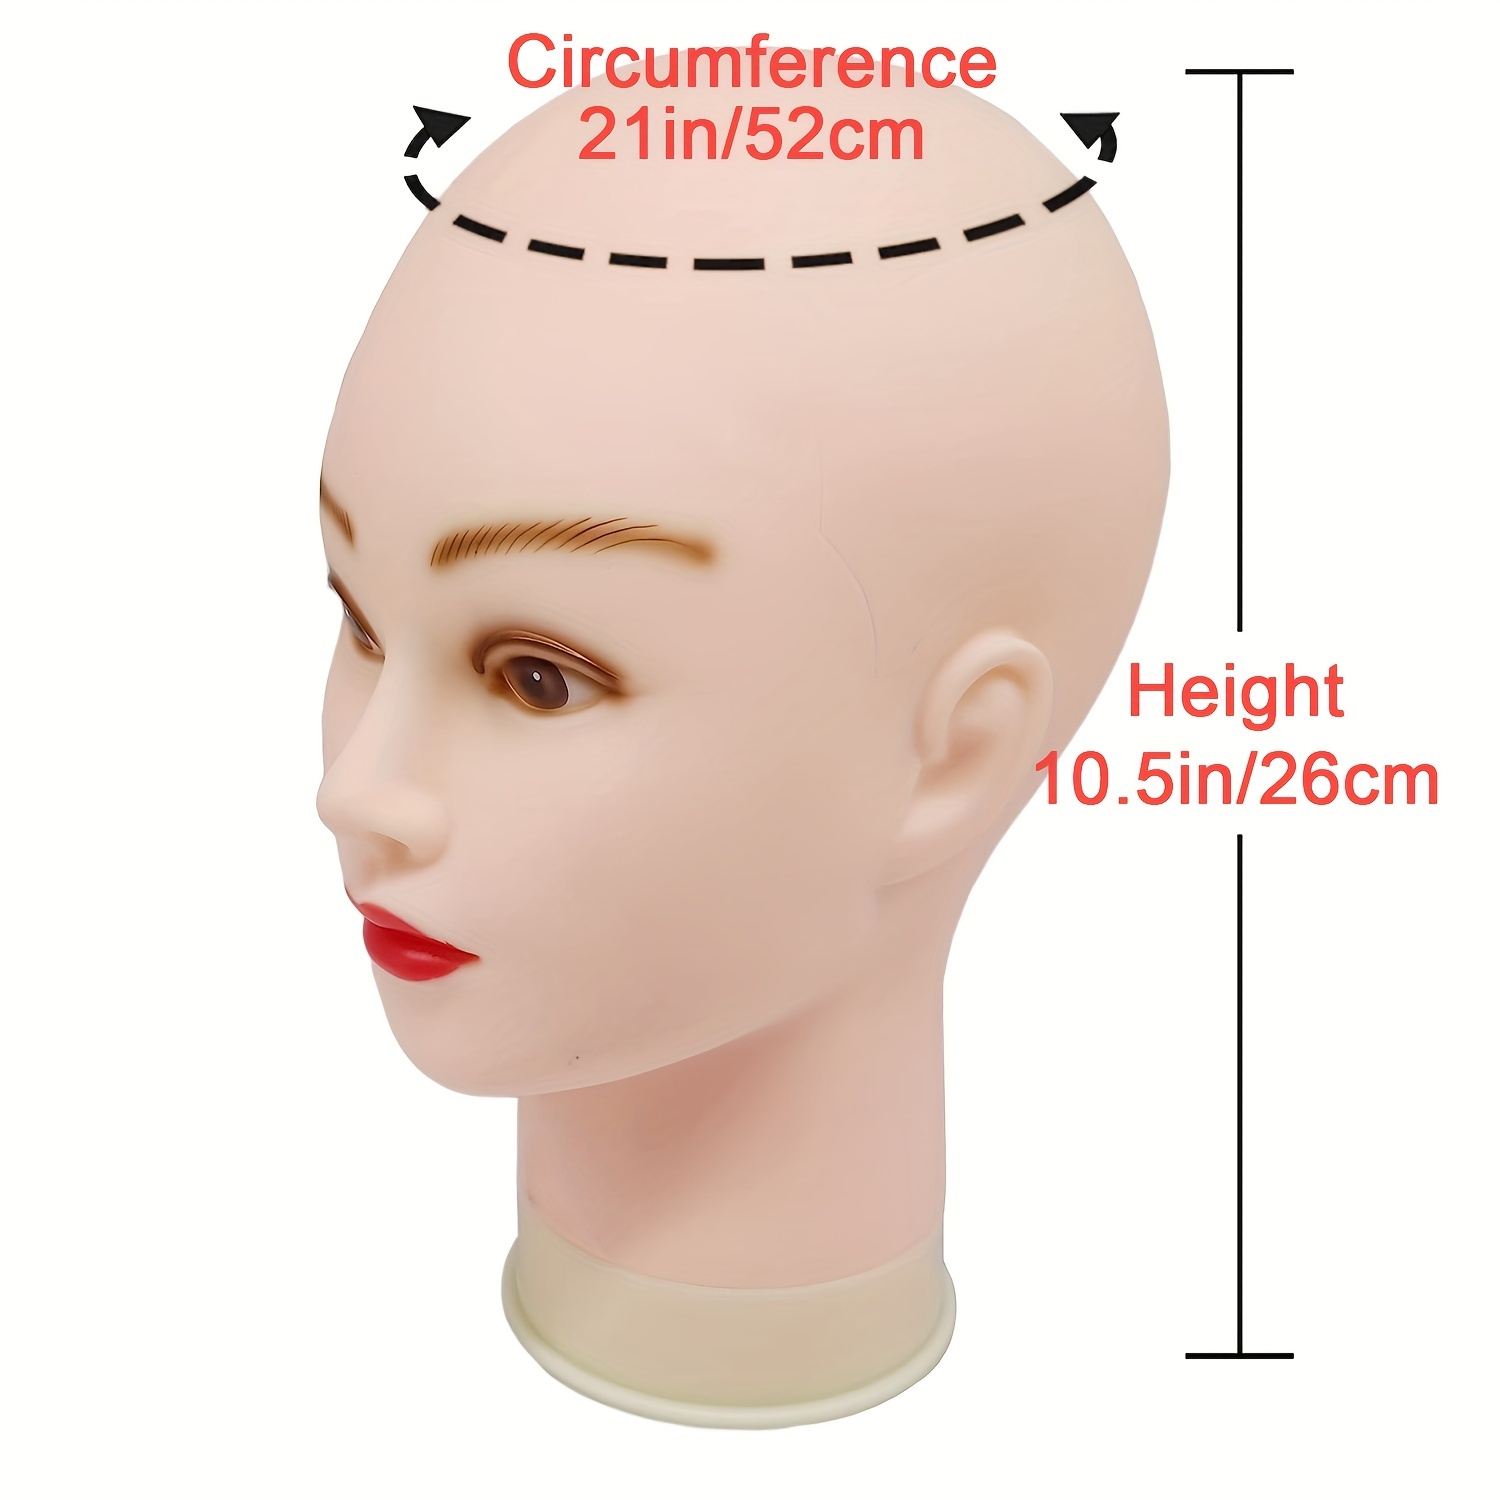 Bald Female Child Manikin Doll Head